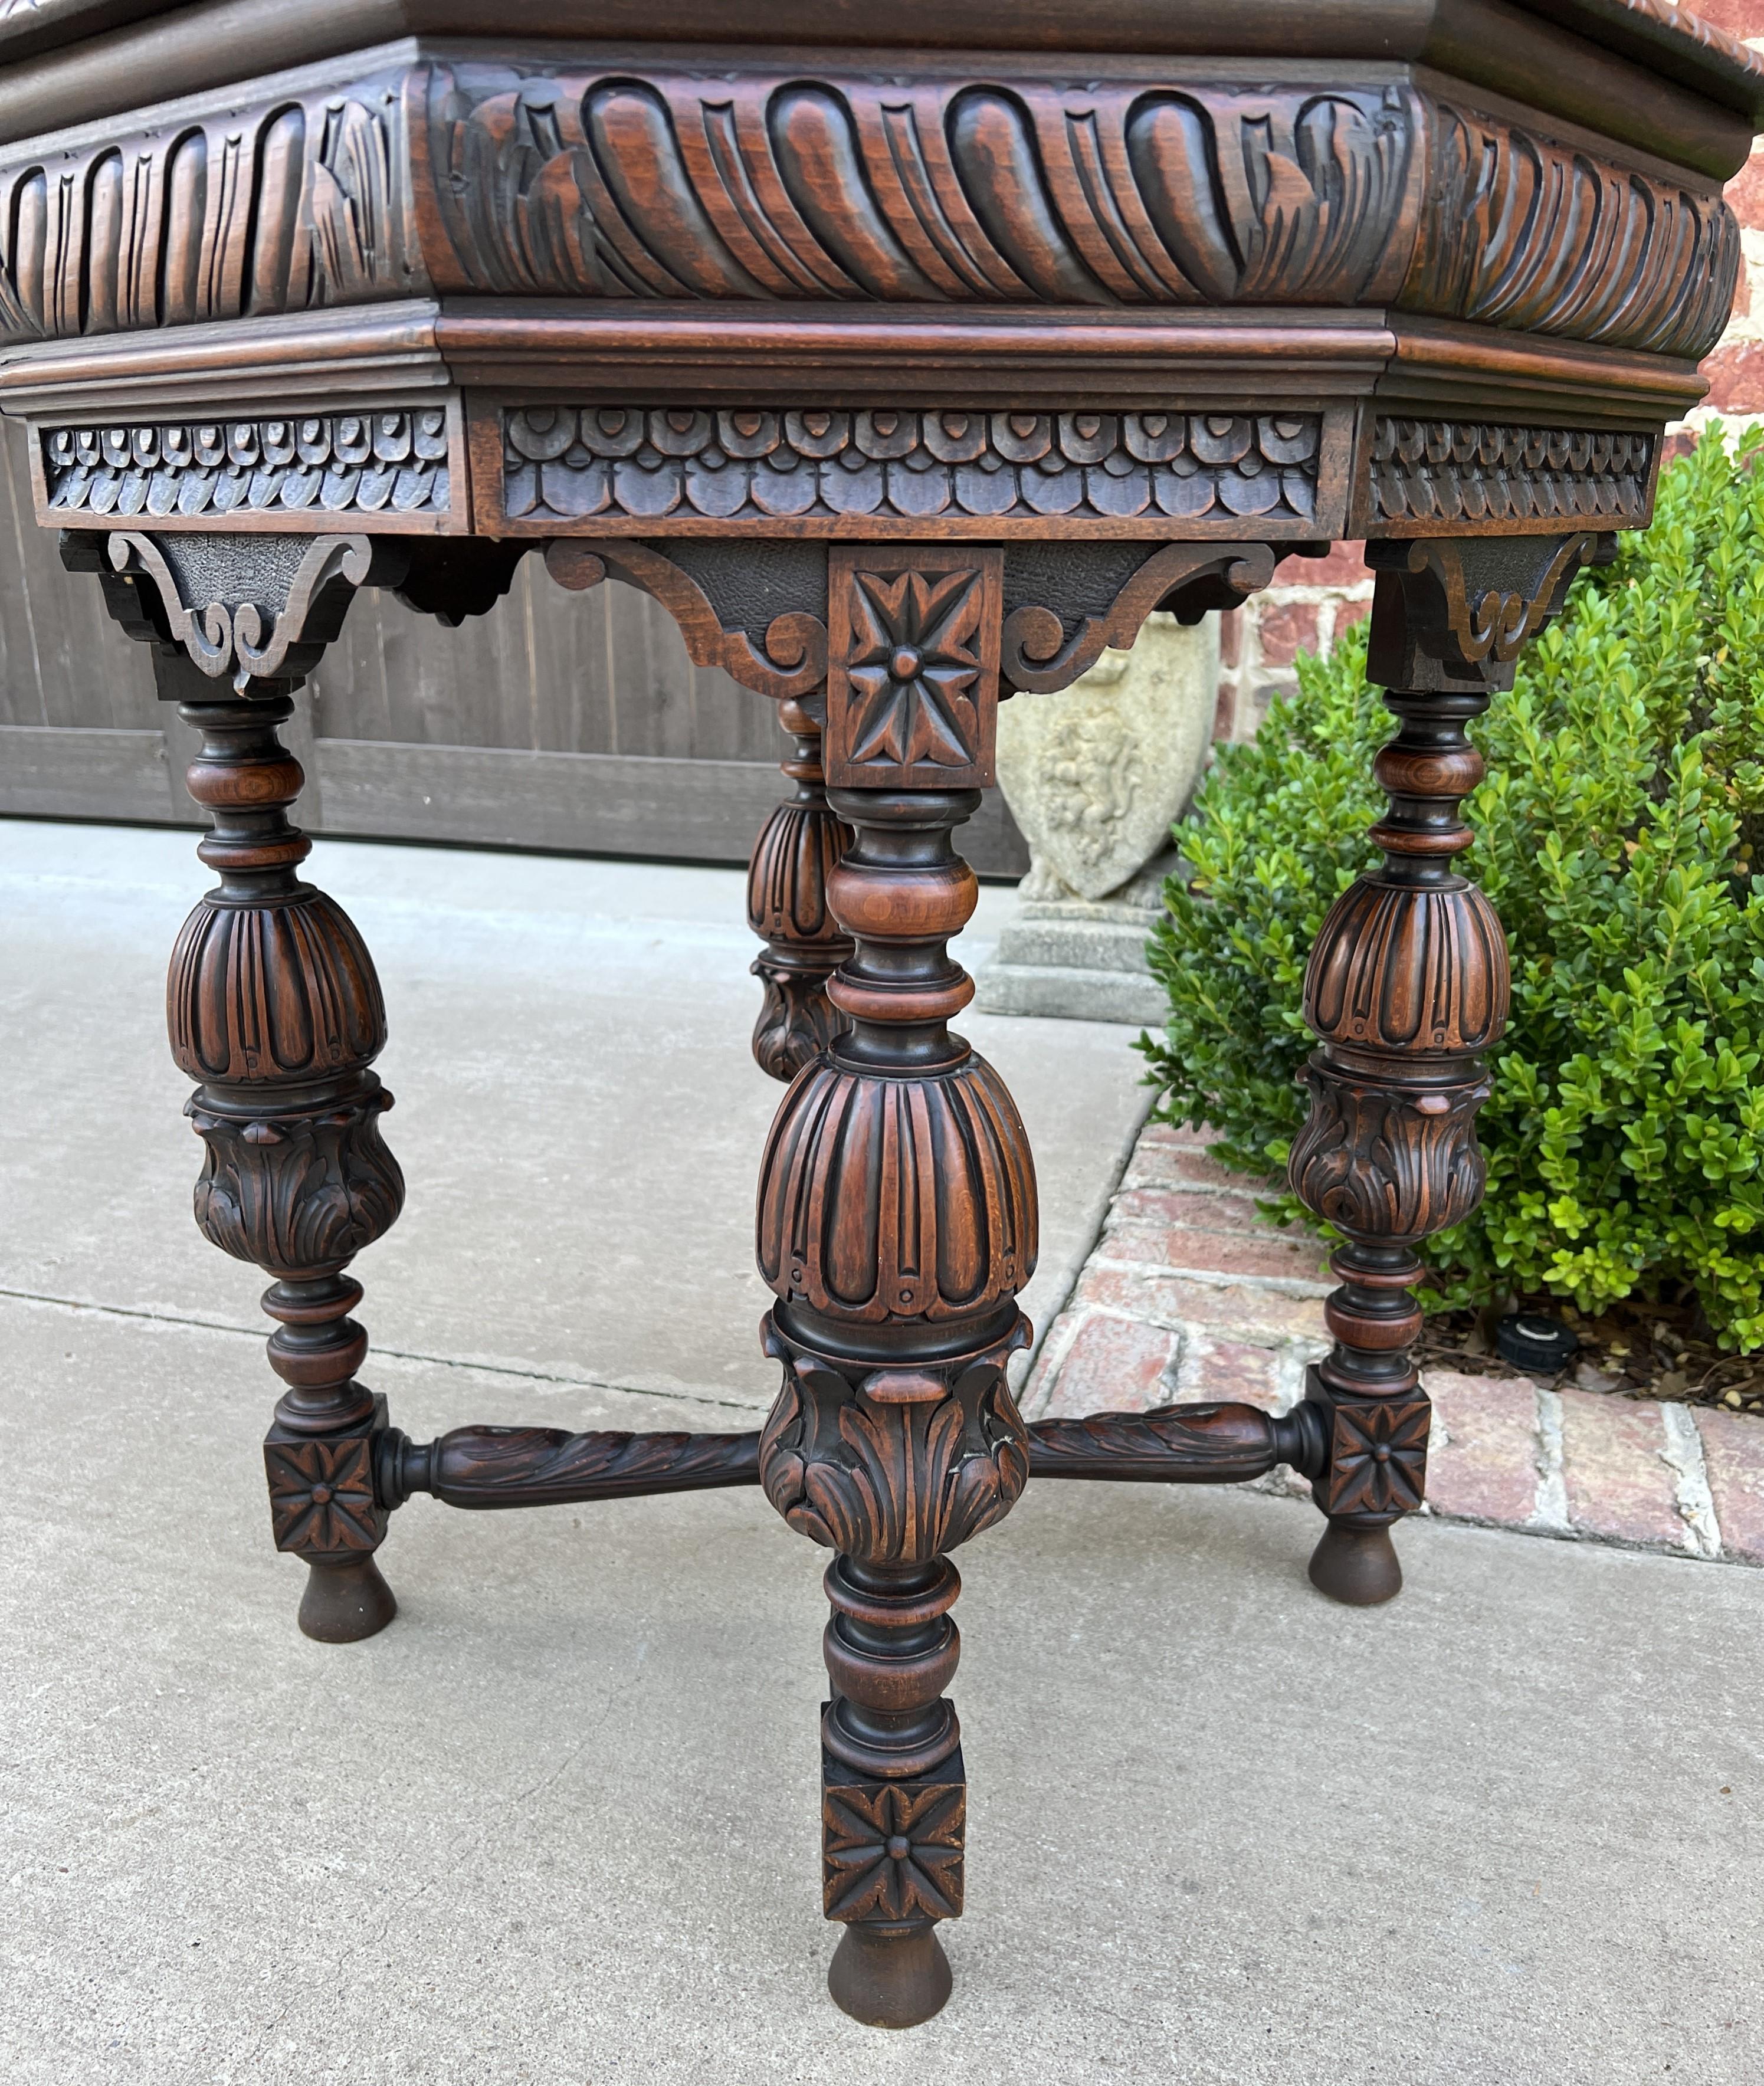 Antique French Table Octagonal Renaissance Revival Carved Oak, 19th Century For Sale 1